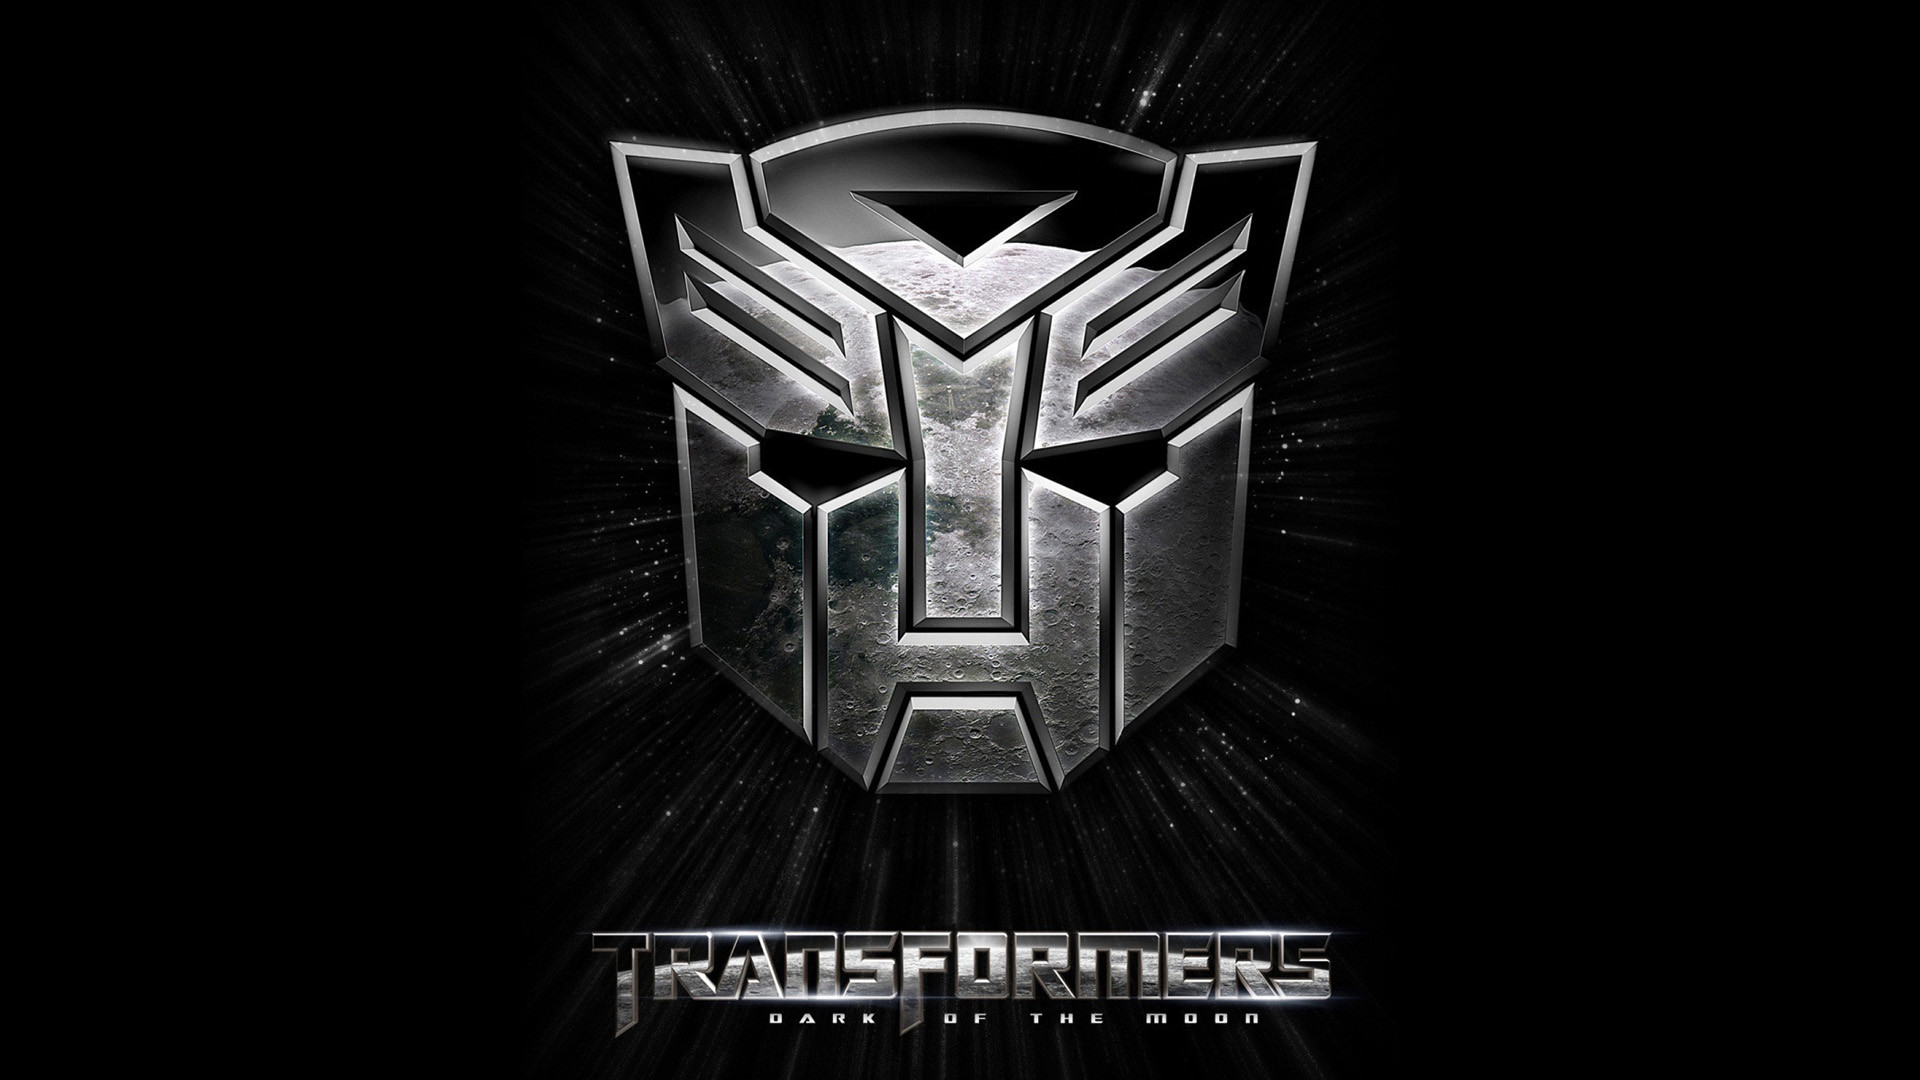 Transformers 3 Dark of the Moon Wallpapers 1920 x 1080 pixels Digital Citizen